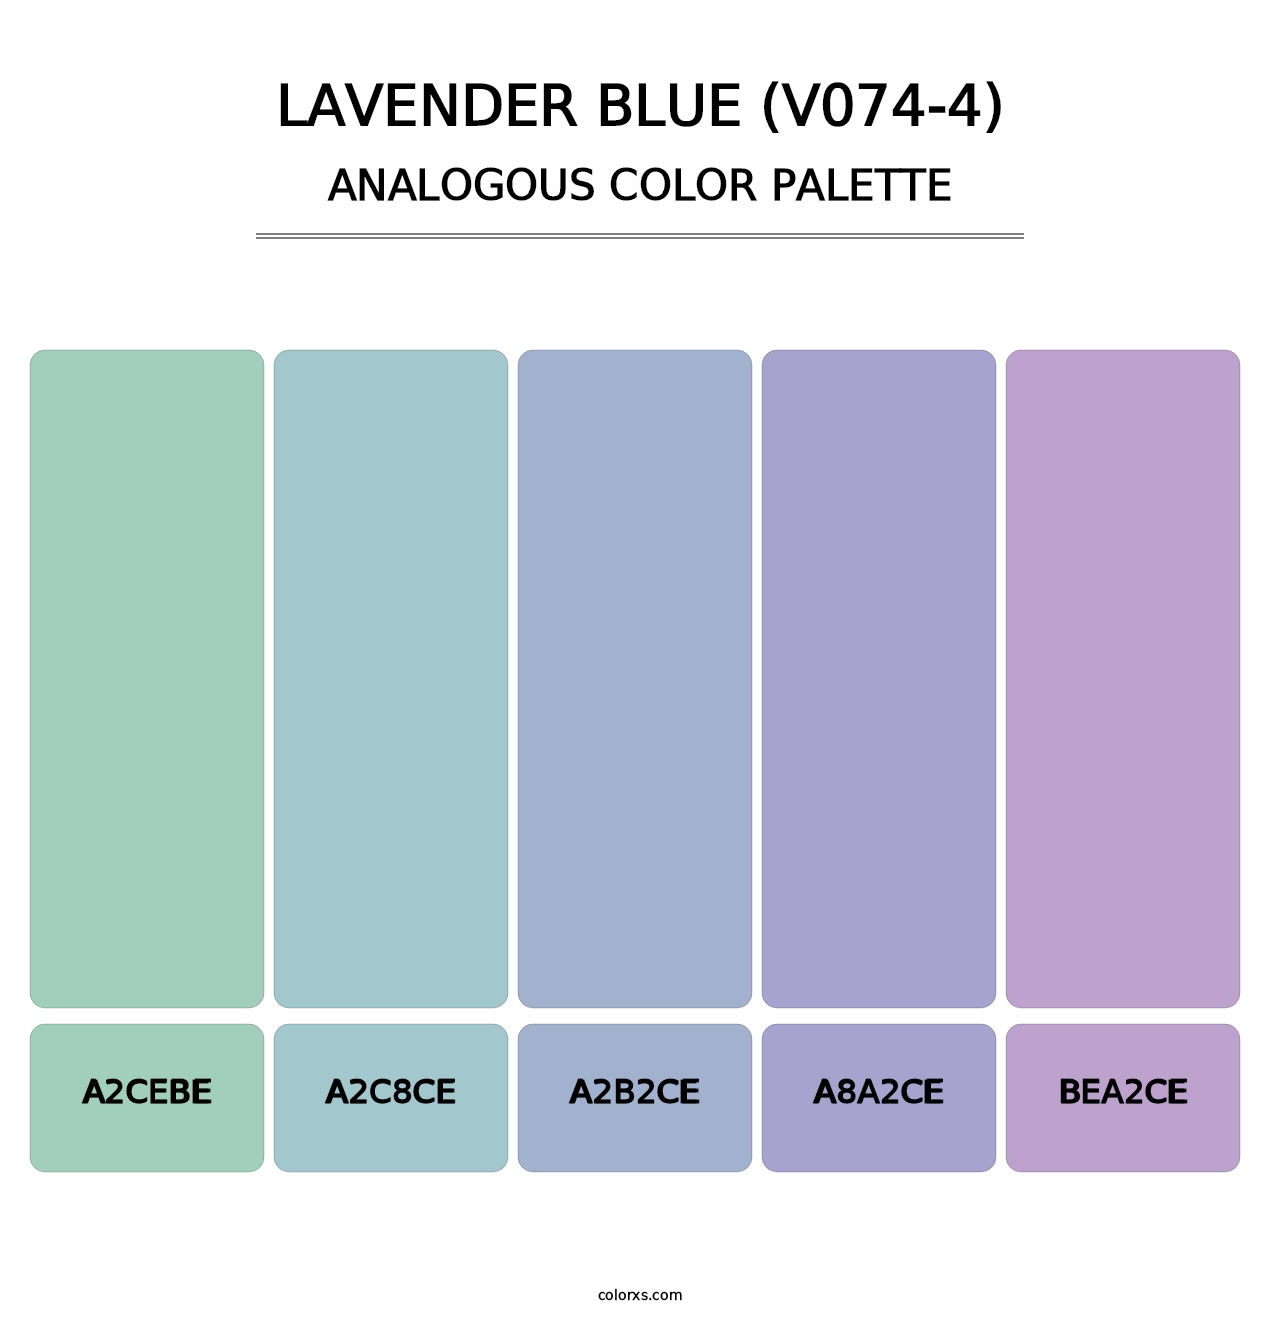 Lavender Blue (V074-4) - Analogous Color Palette